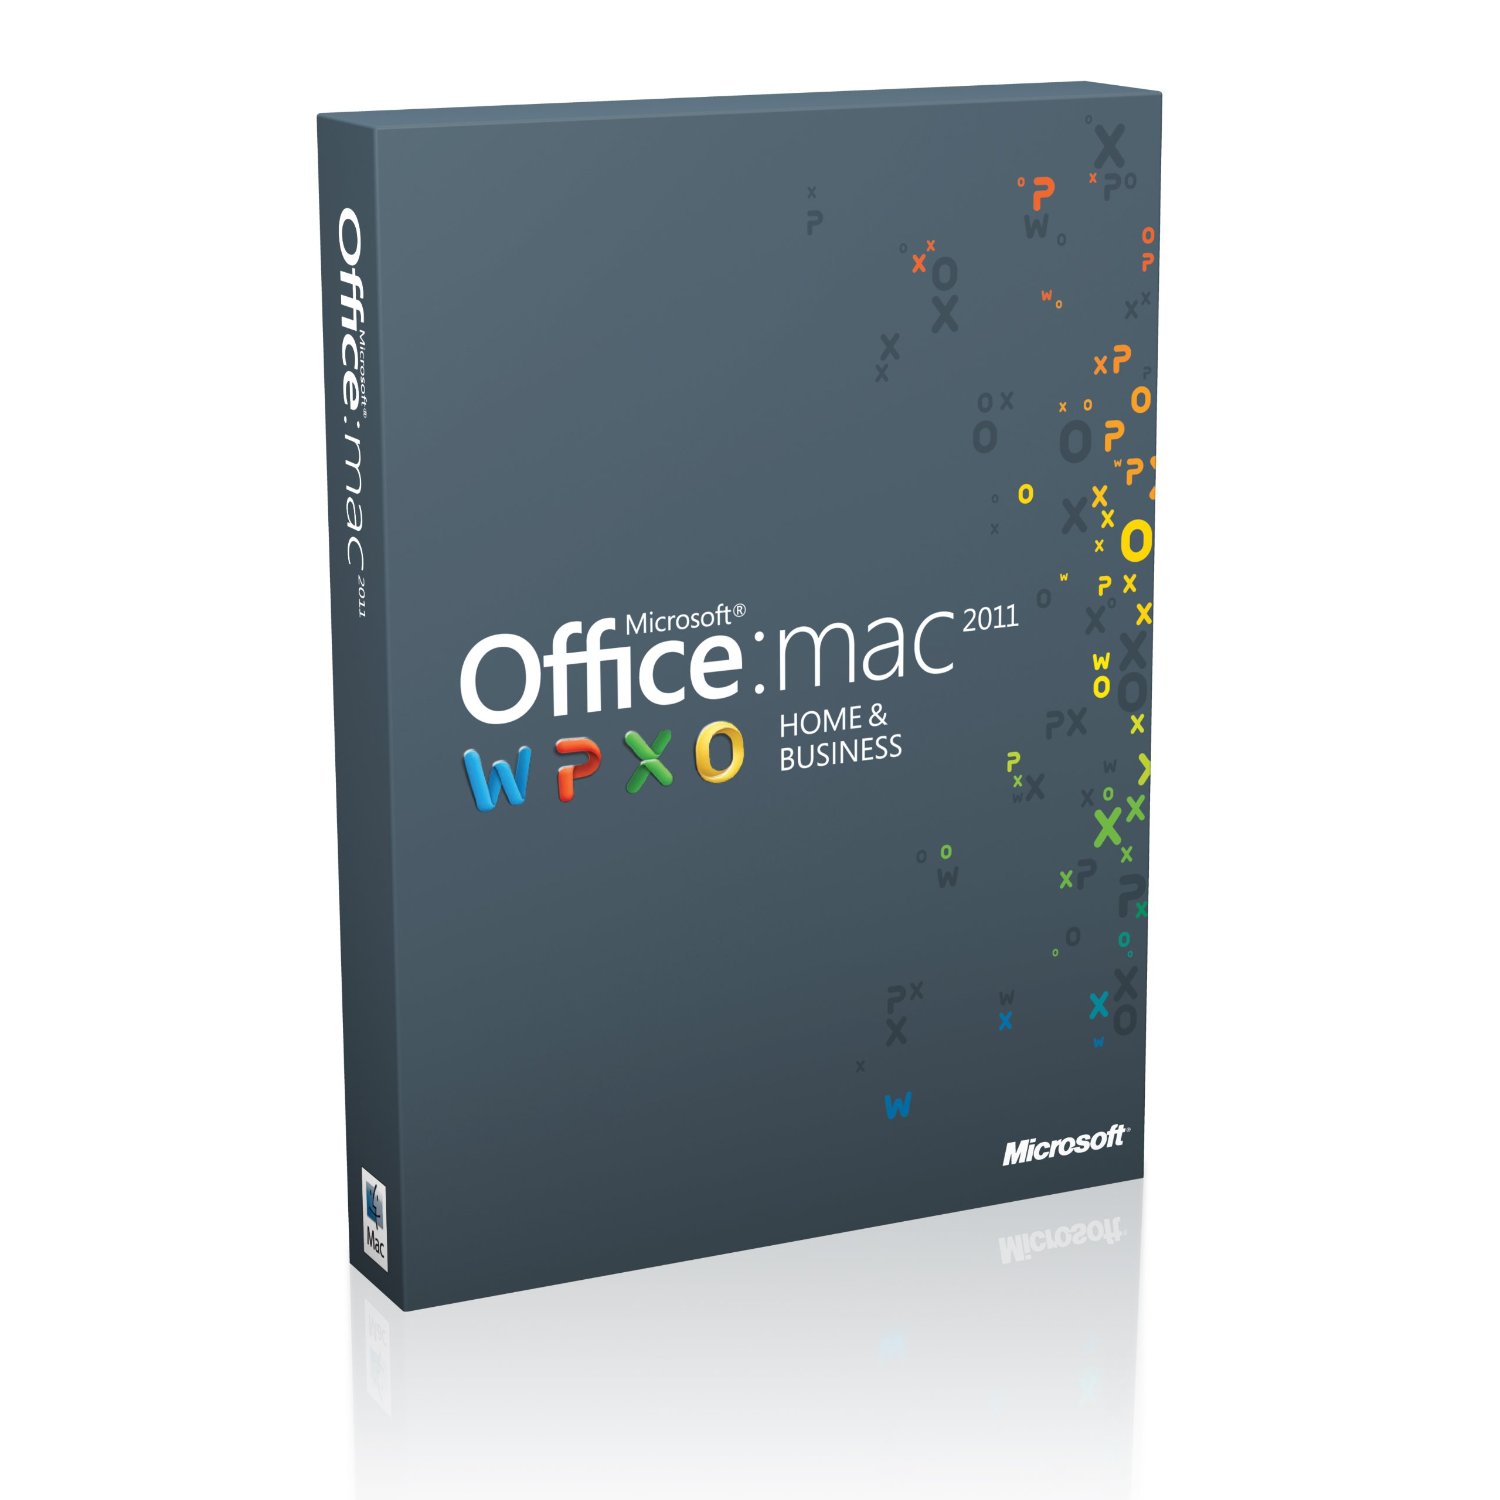 Microsoft office 2011 mac full version free download